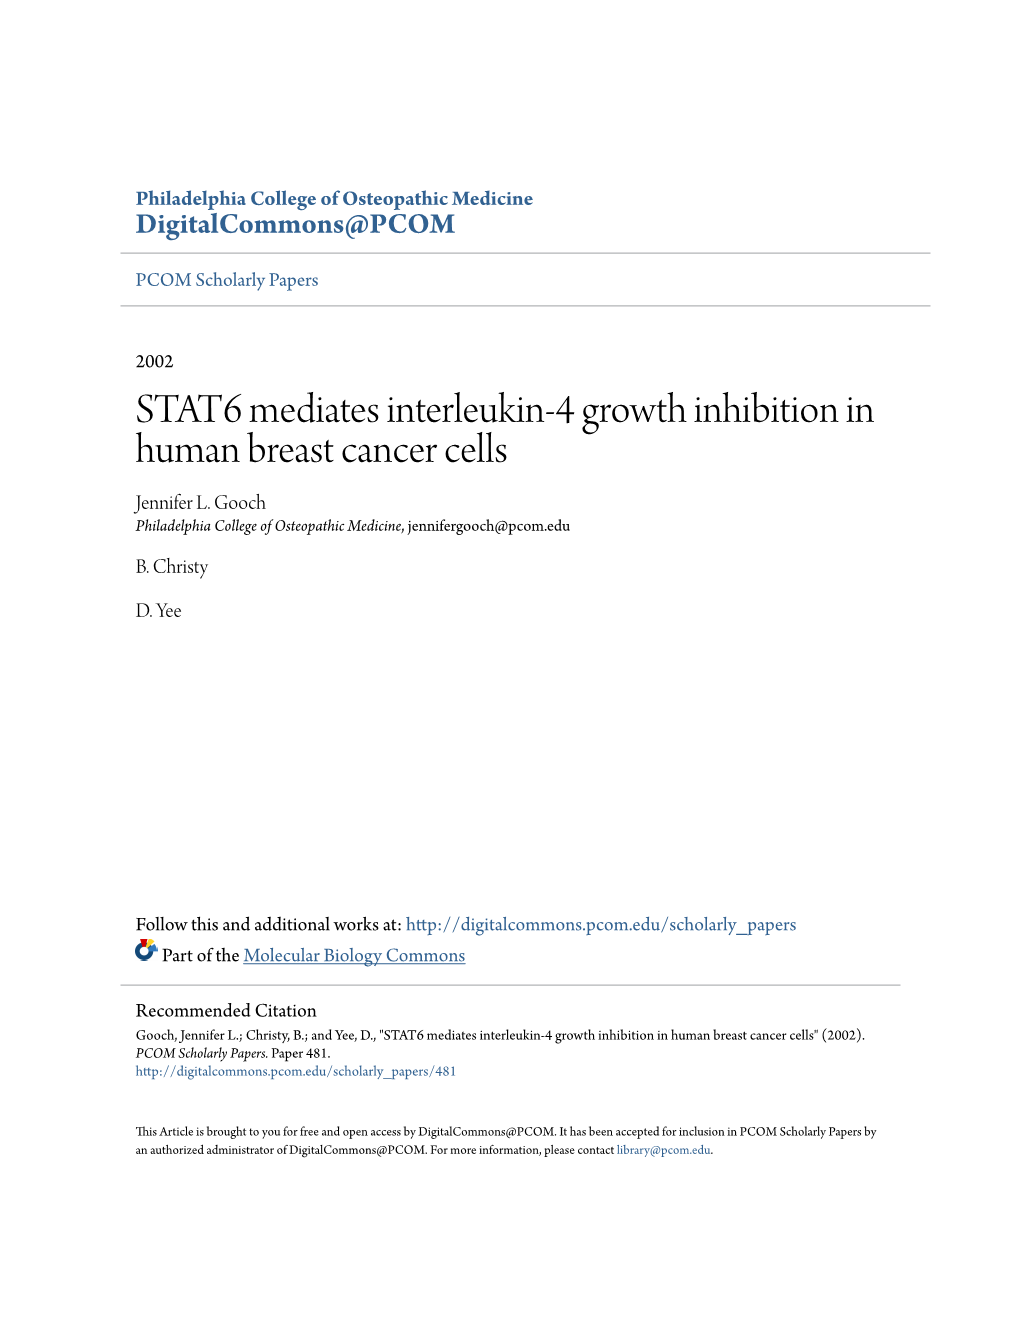 STAT6 Mediates Interleukin-4 Growth Inhibition in Human Breast Cancer Cells Jennifer L